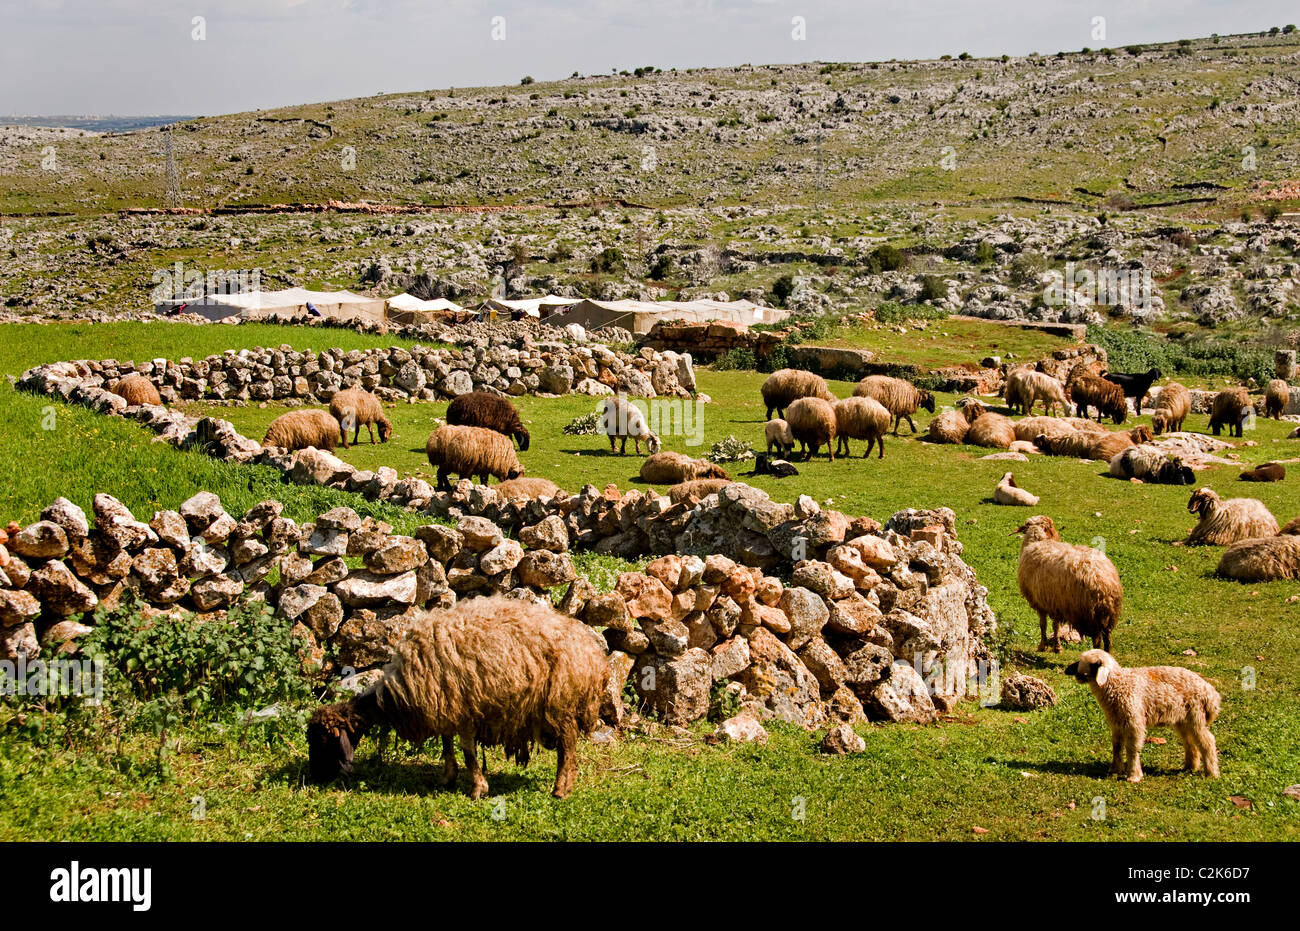 Syria desert farm farmer sheep Bedouin  Bedouins Stock Photo